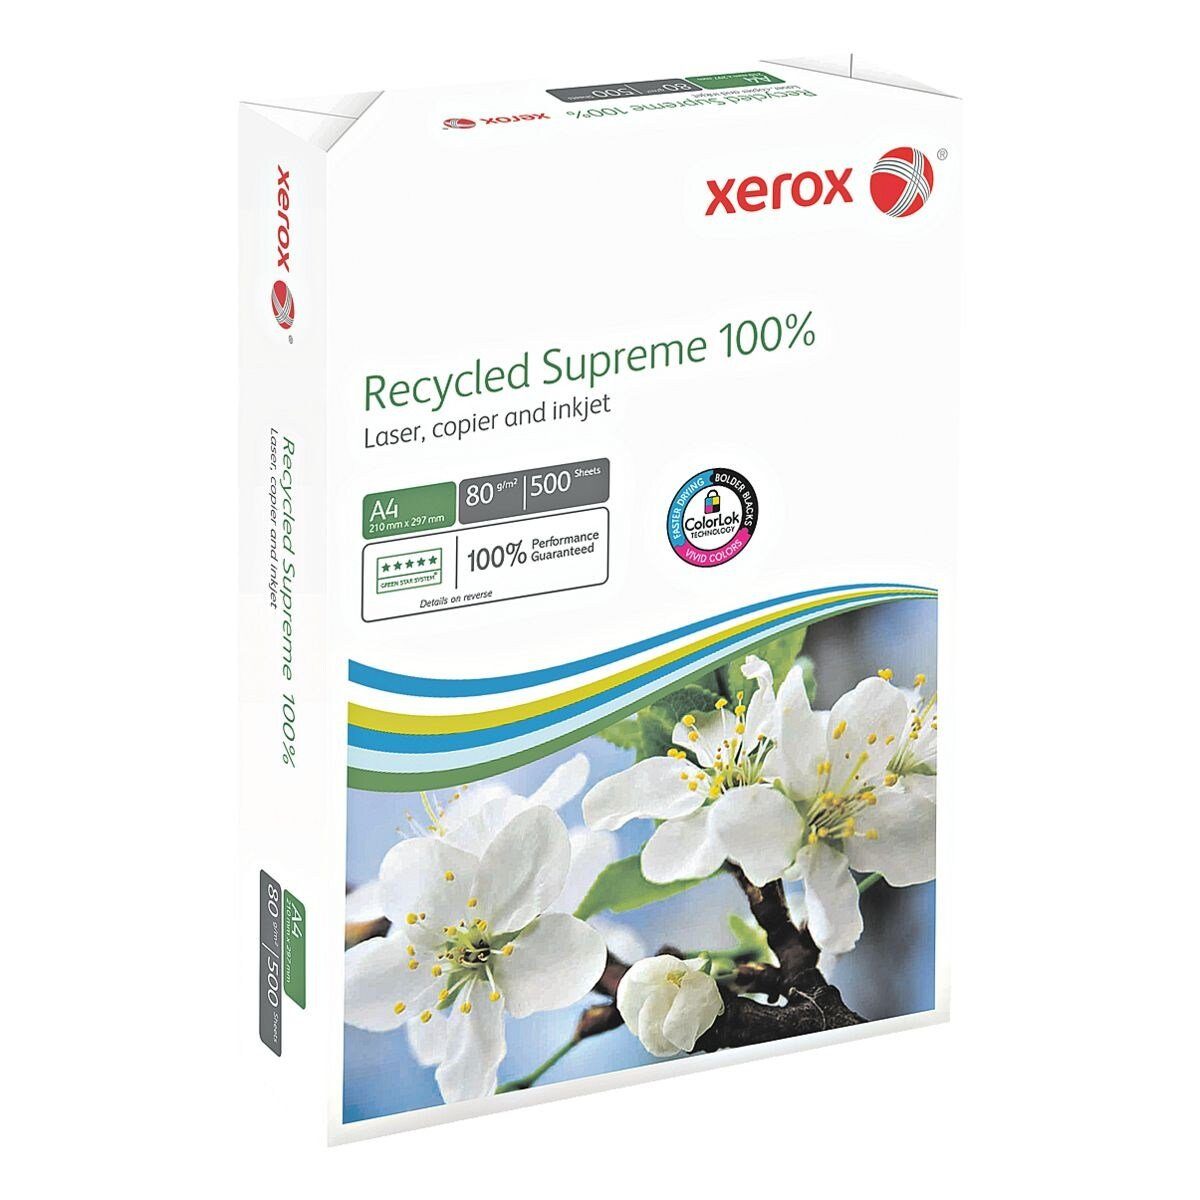 A4, Format 80 CIE, 150 500 100%, Recycled DIN Blatt g/m², Xerox Recyclingpapier Supreme